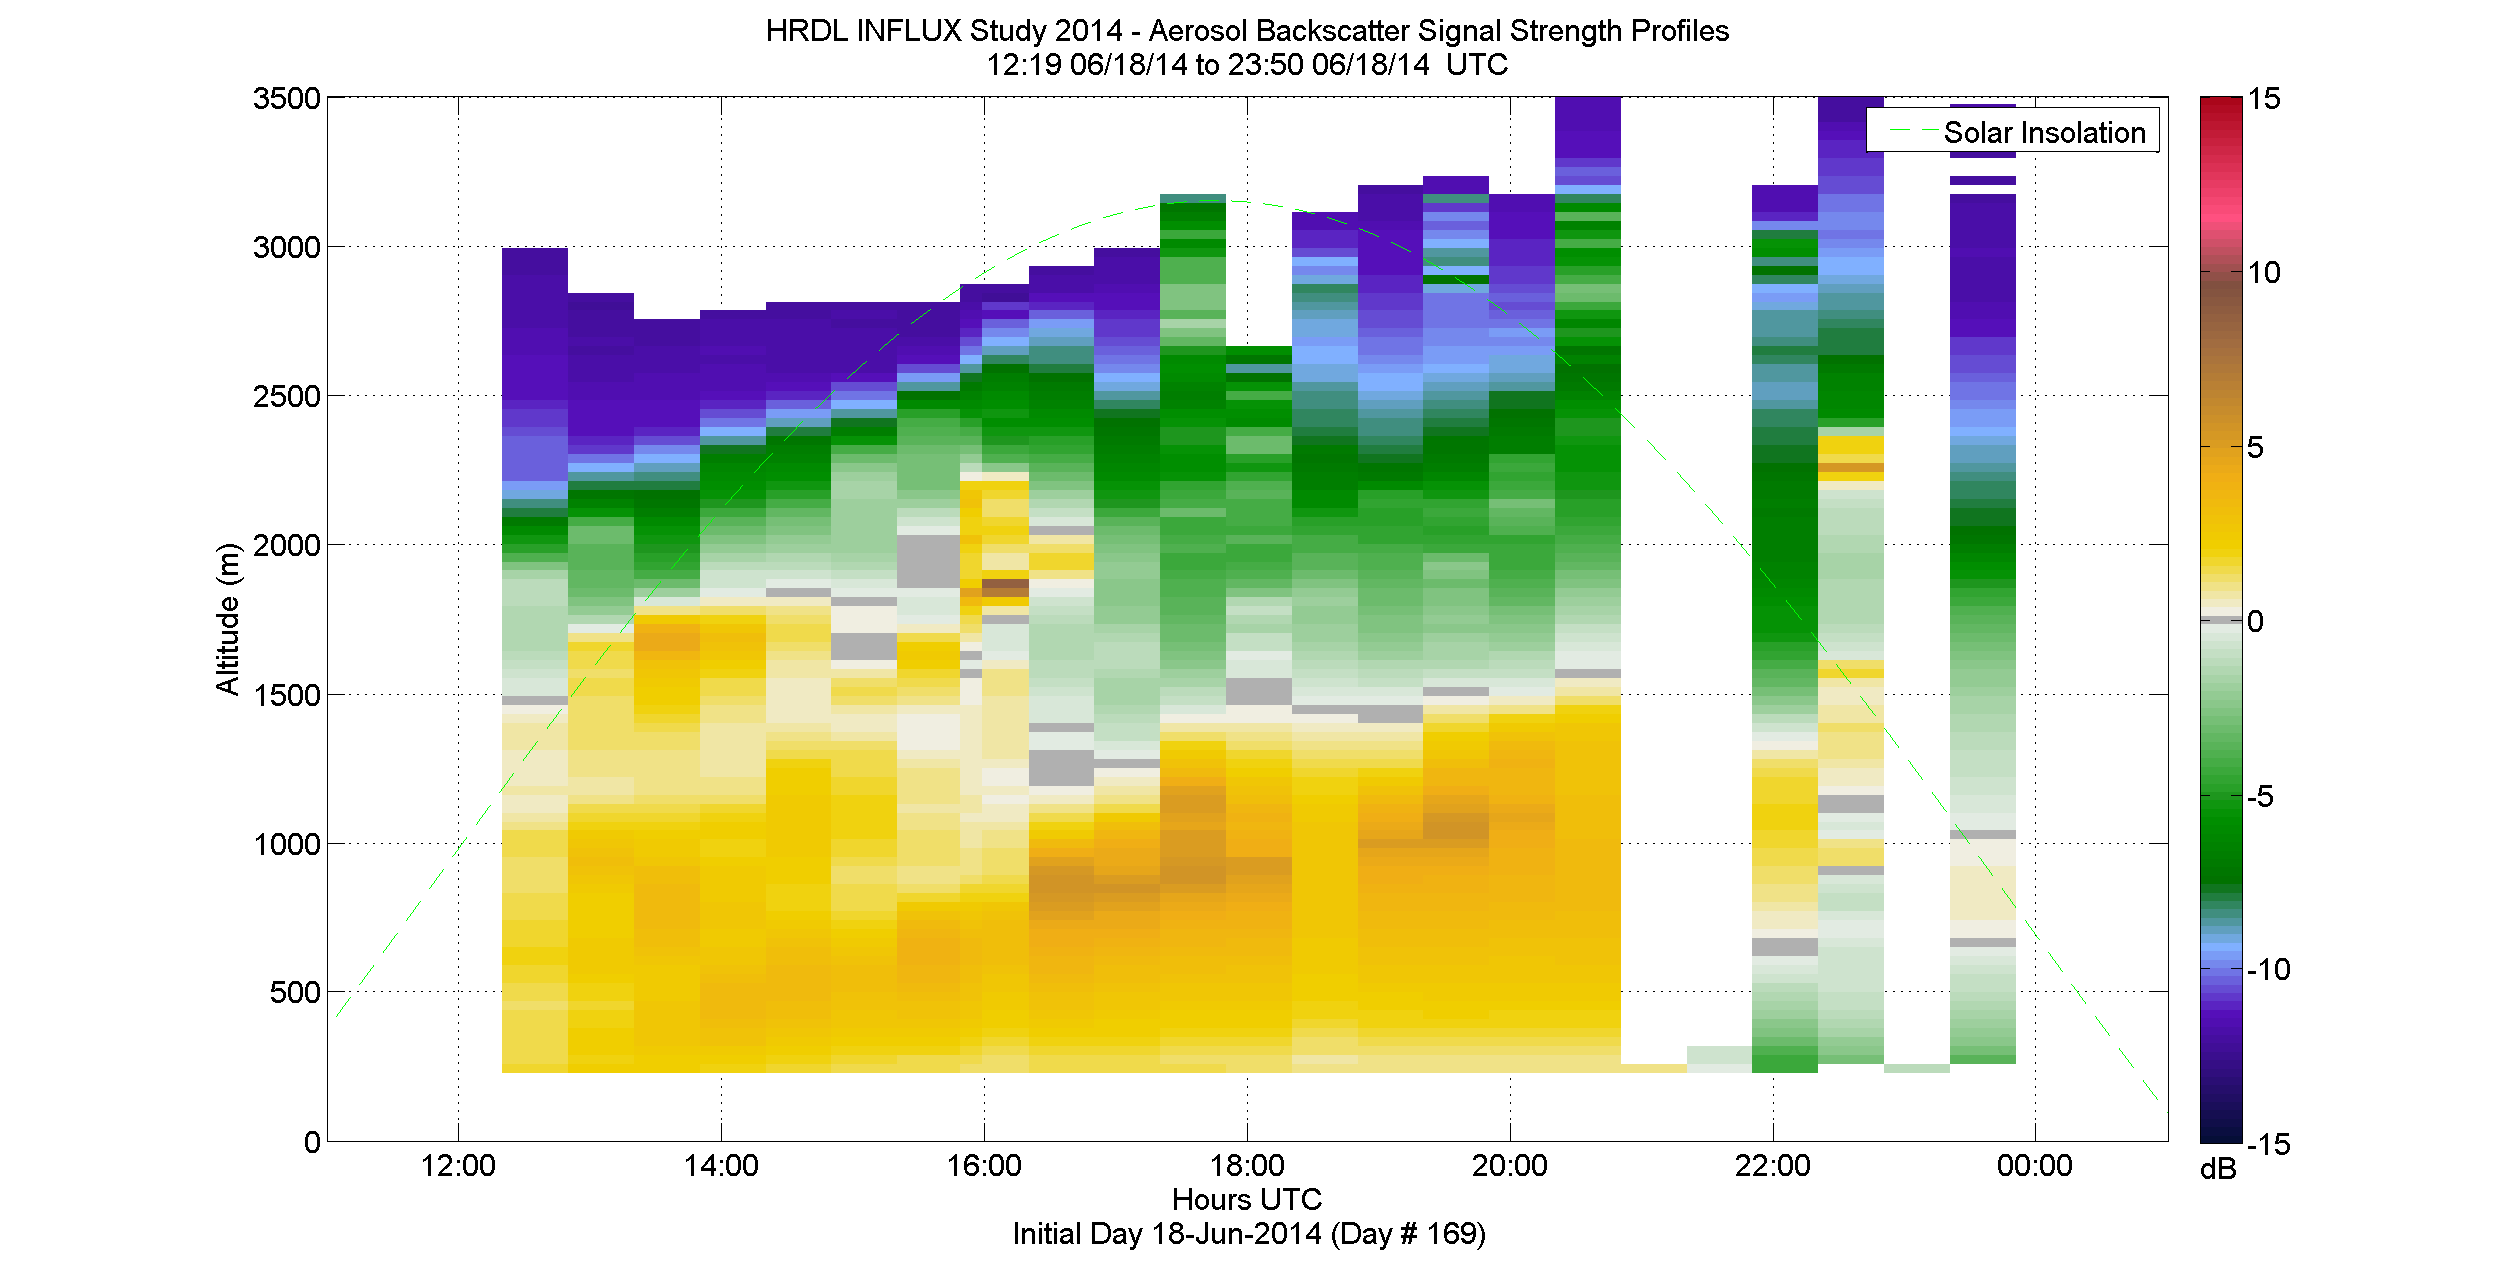 HRDL aerosol backscatter signal strength profile - June 18 pm